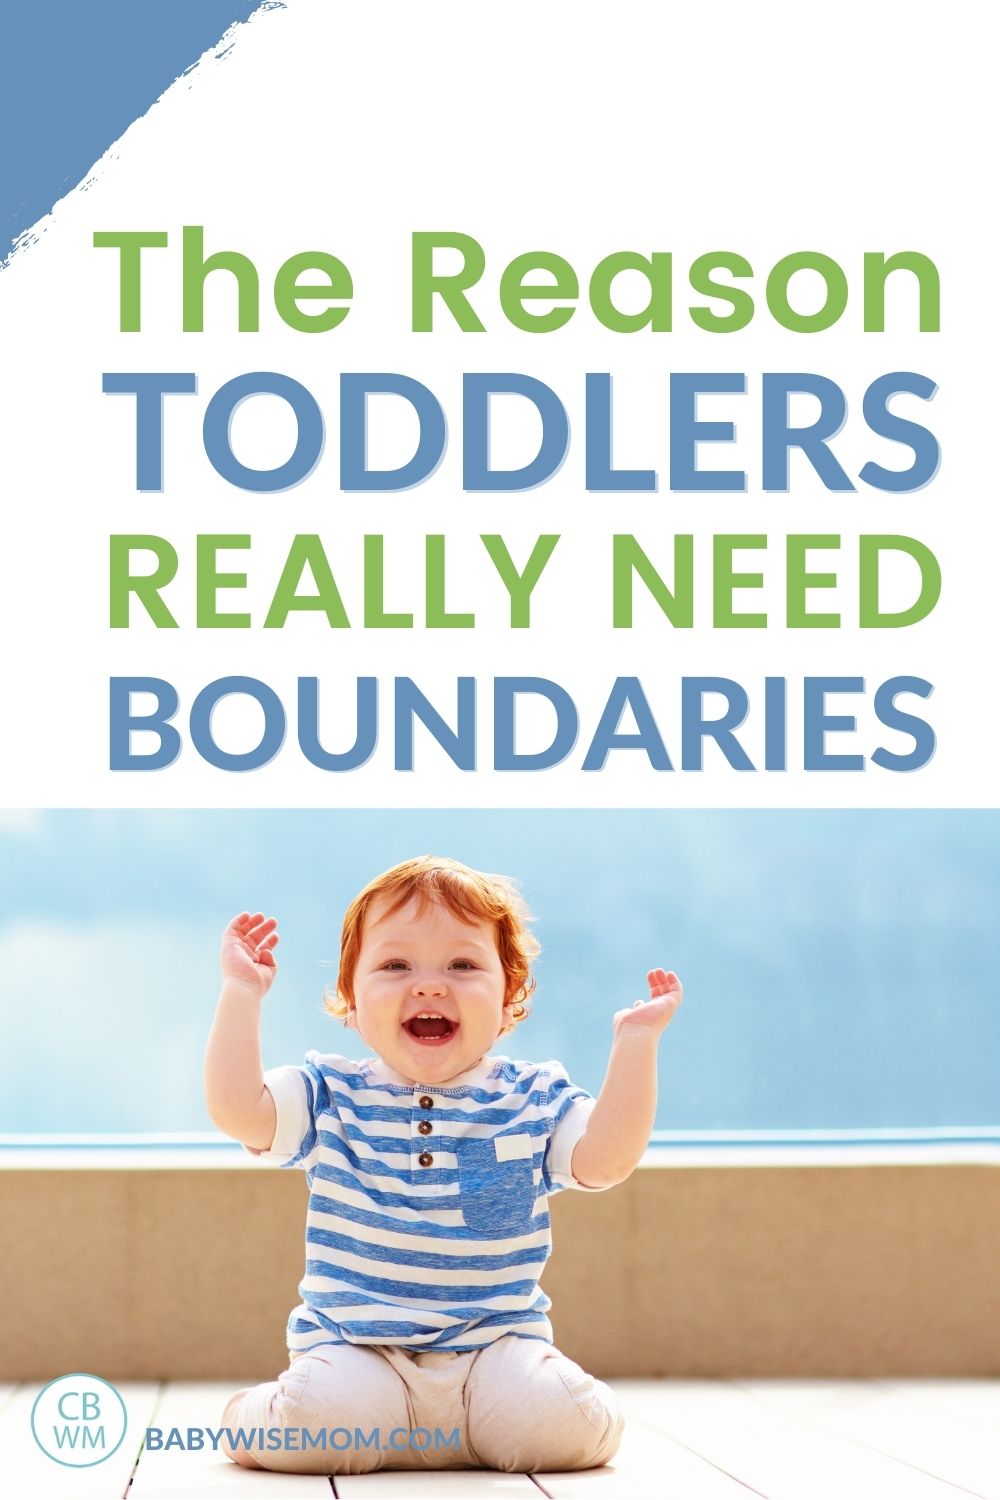 Toddlers need boundaries